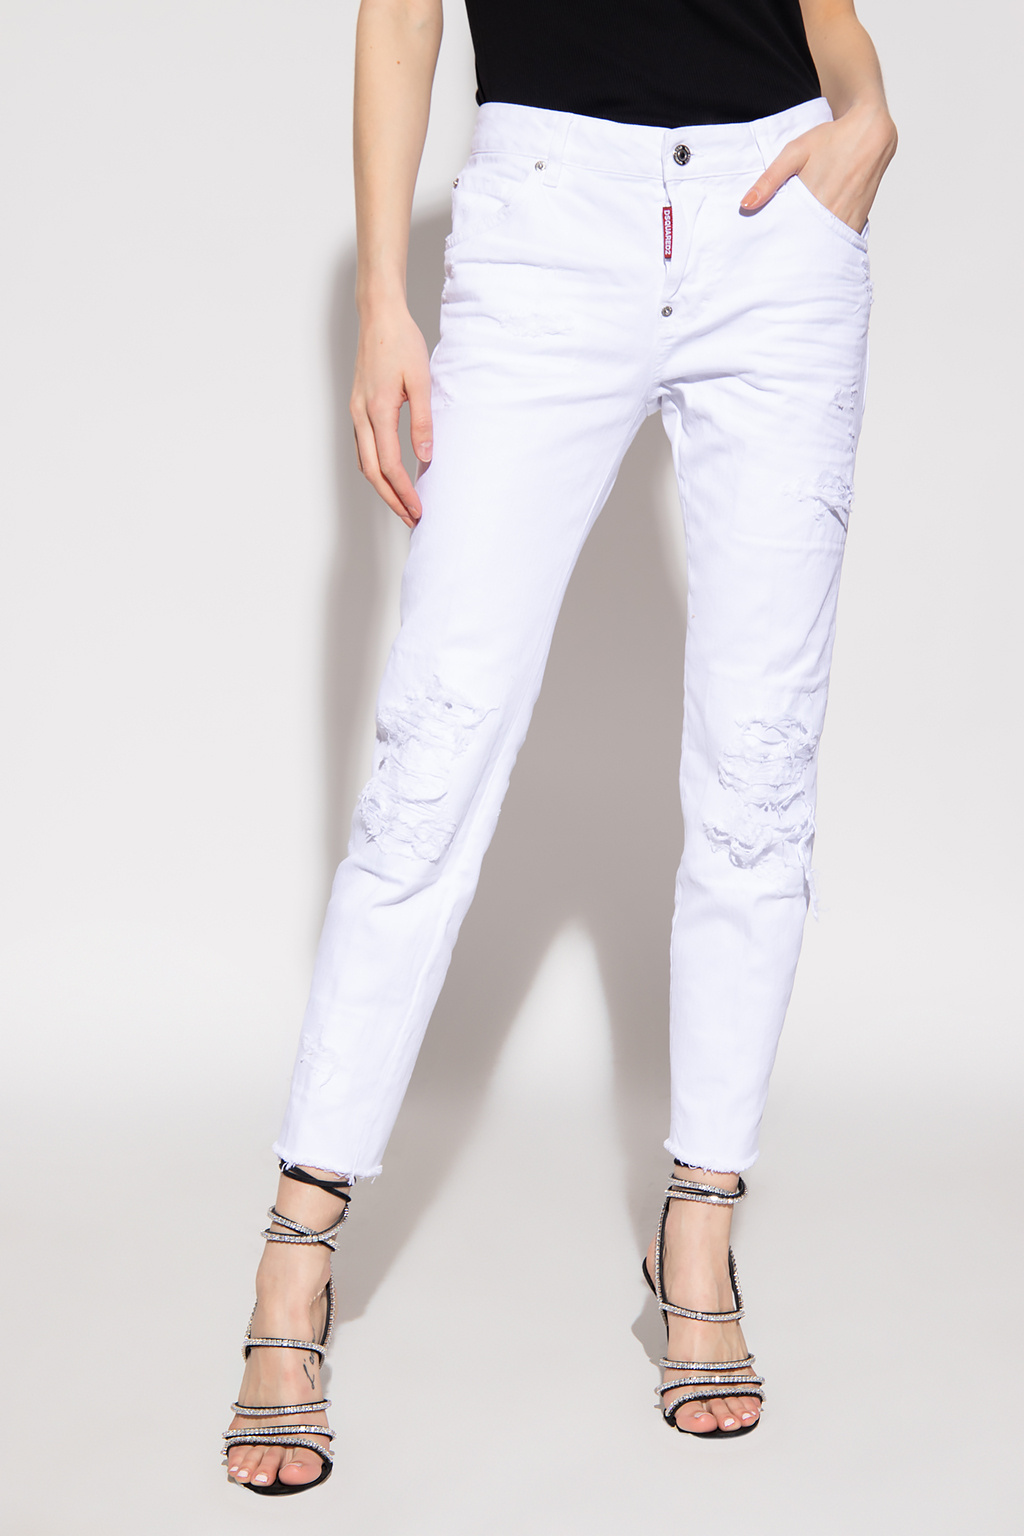 Iisla & Bird Exclusive beach drawstring pants in white